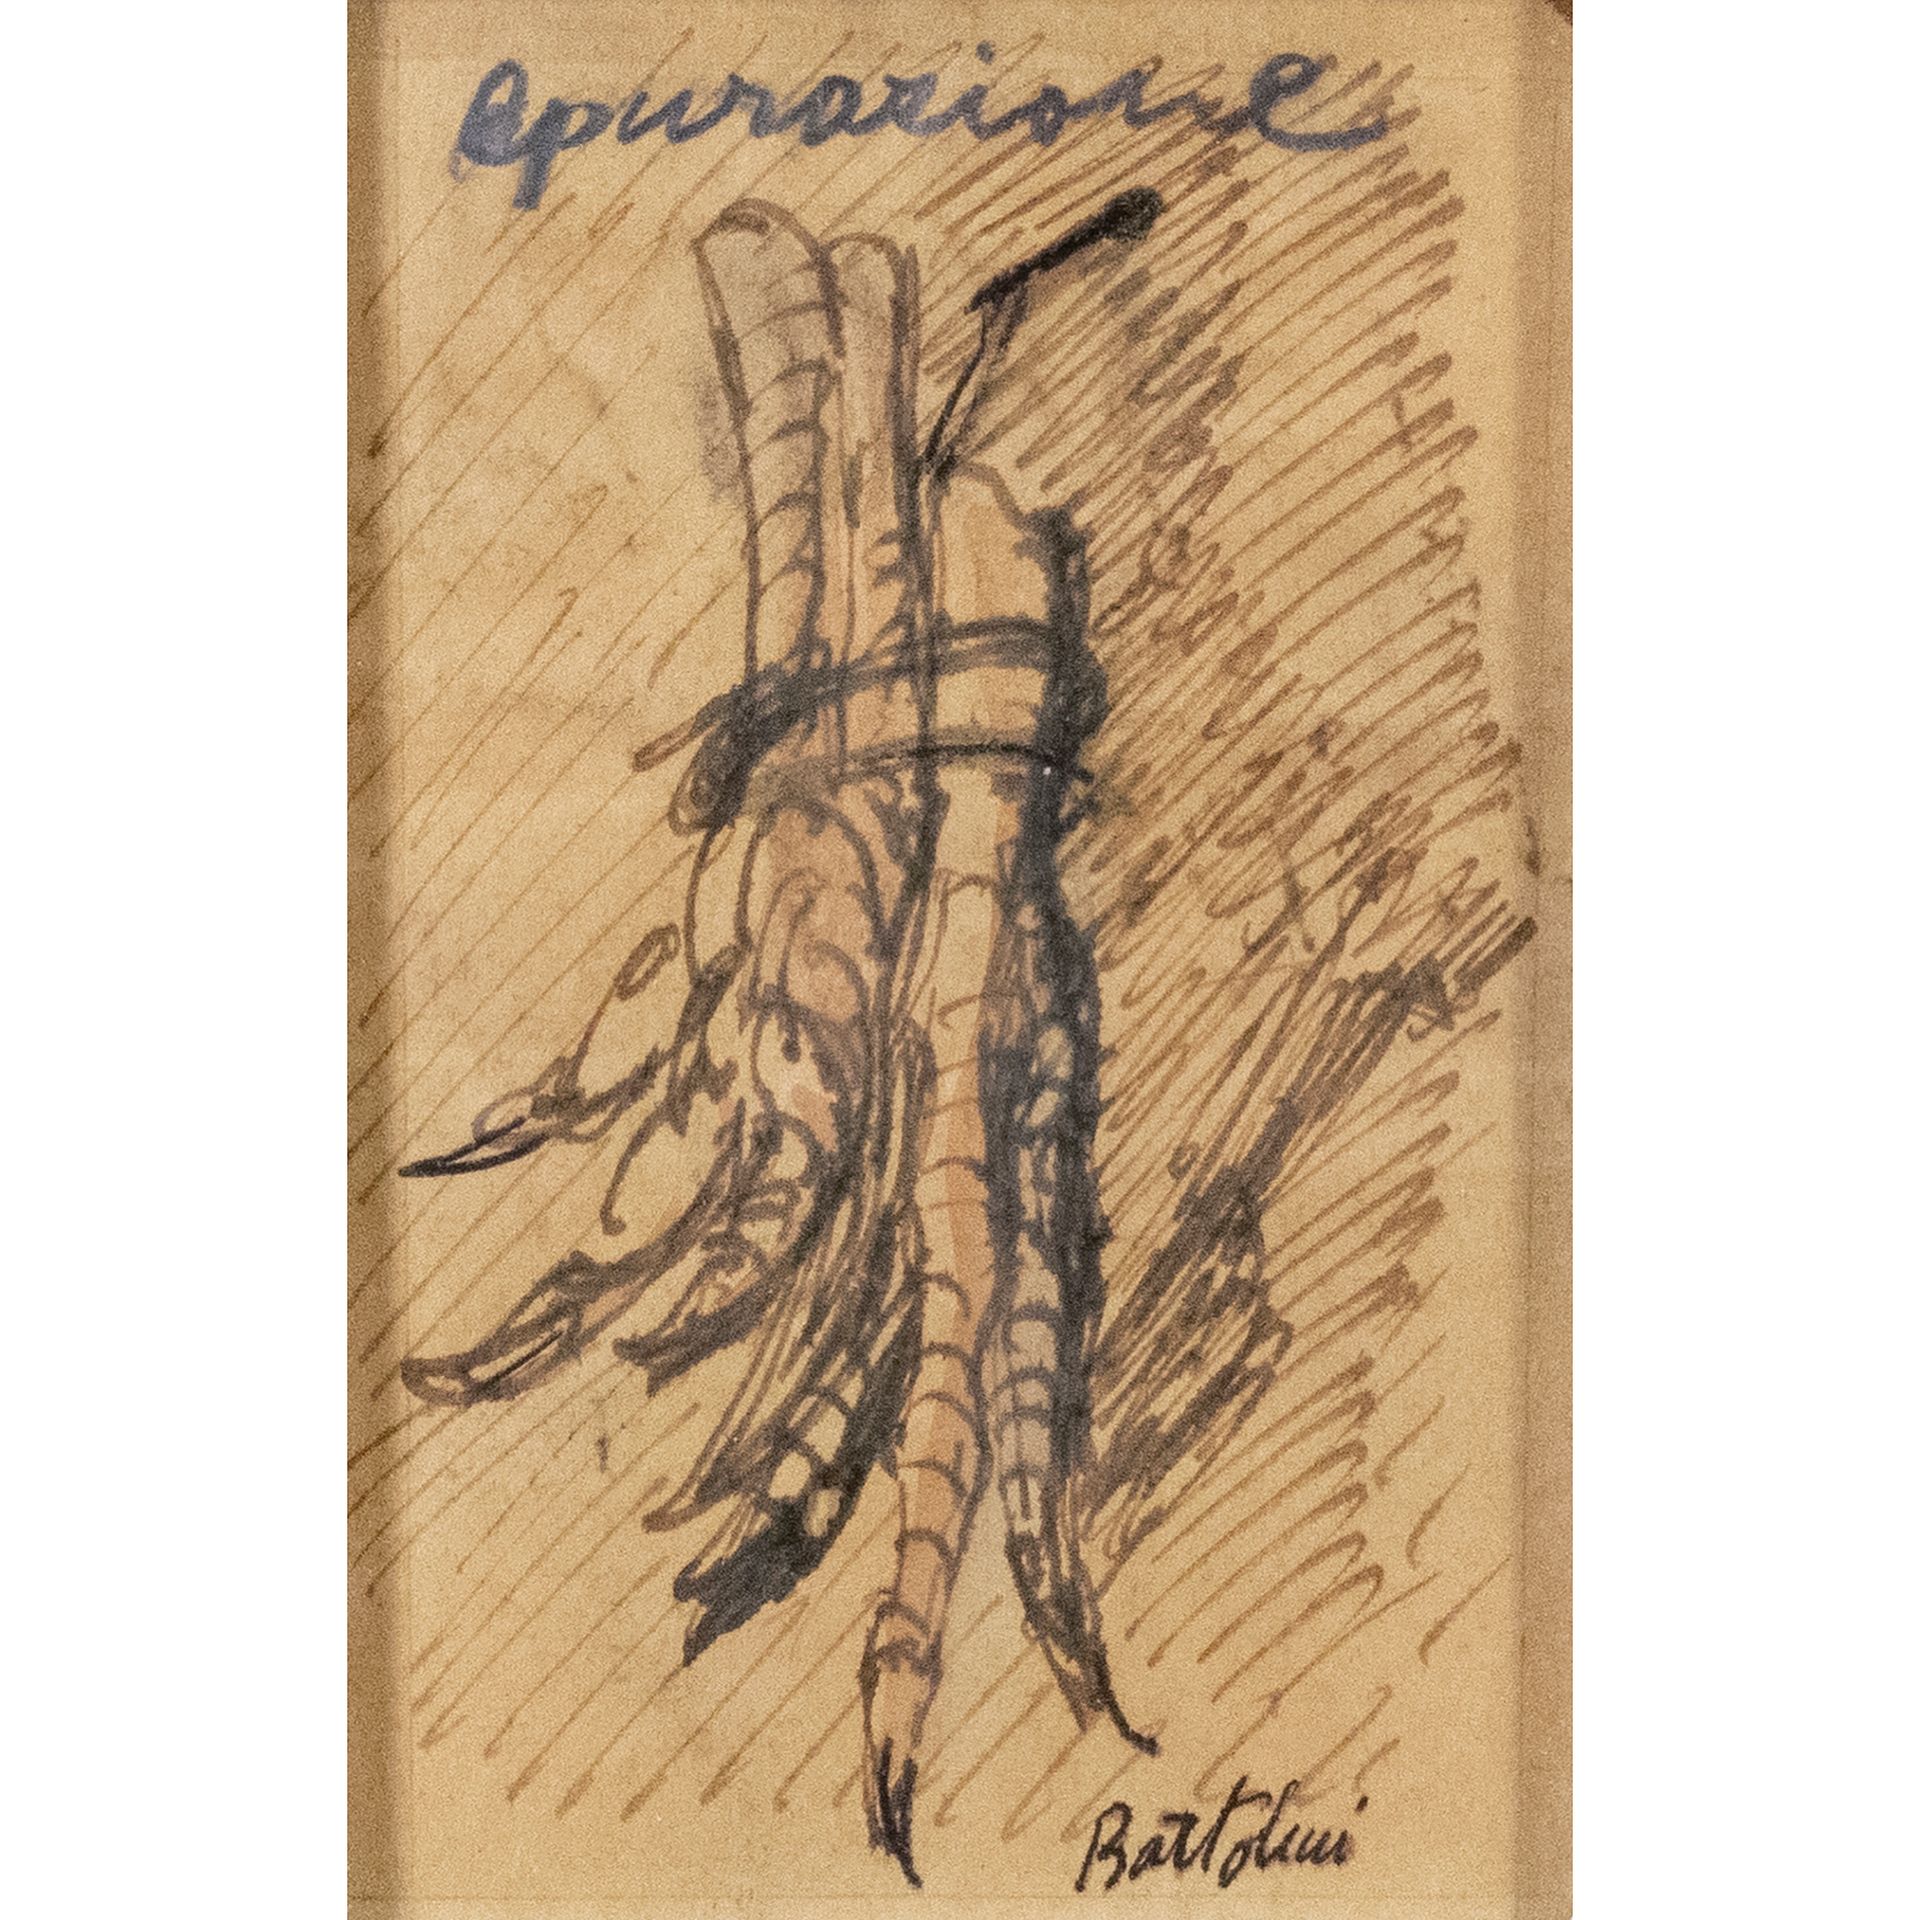 Luigi Bartolini Cupramontana 1892 - Roma 1963, 14x9cm., "Epurazione", Mischtechn&hellip;